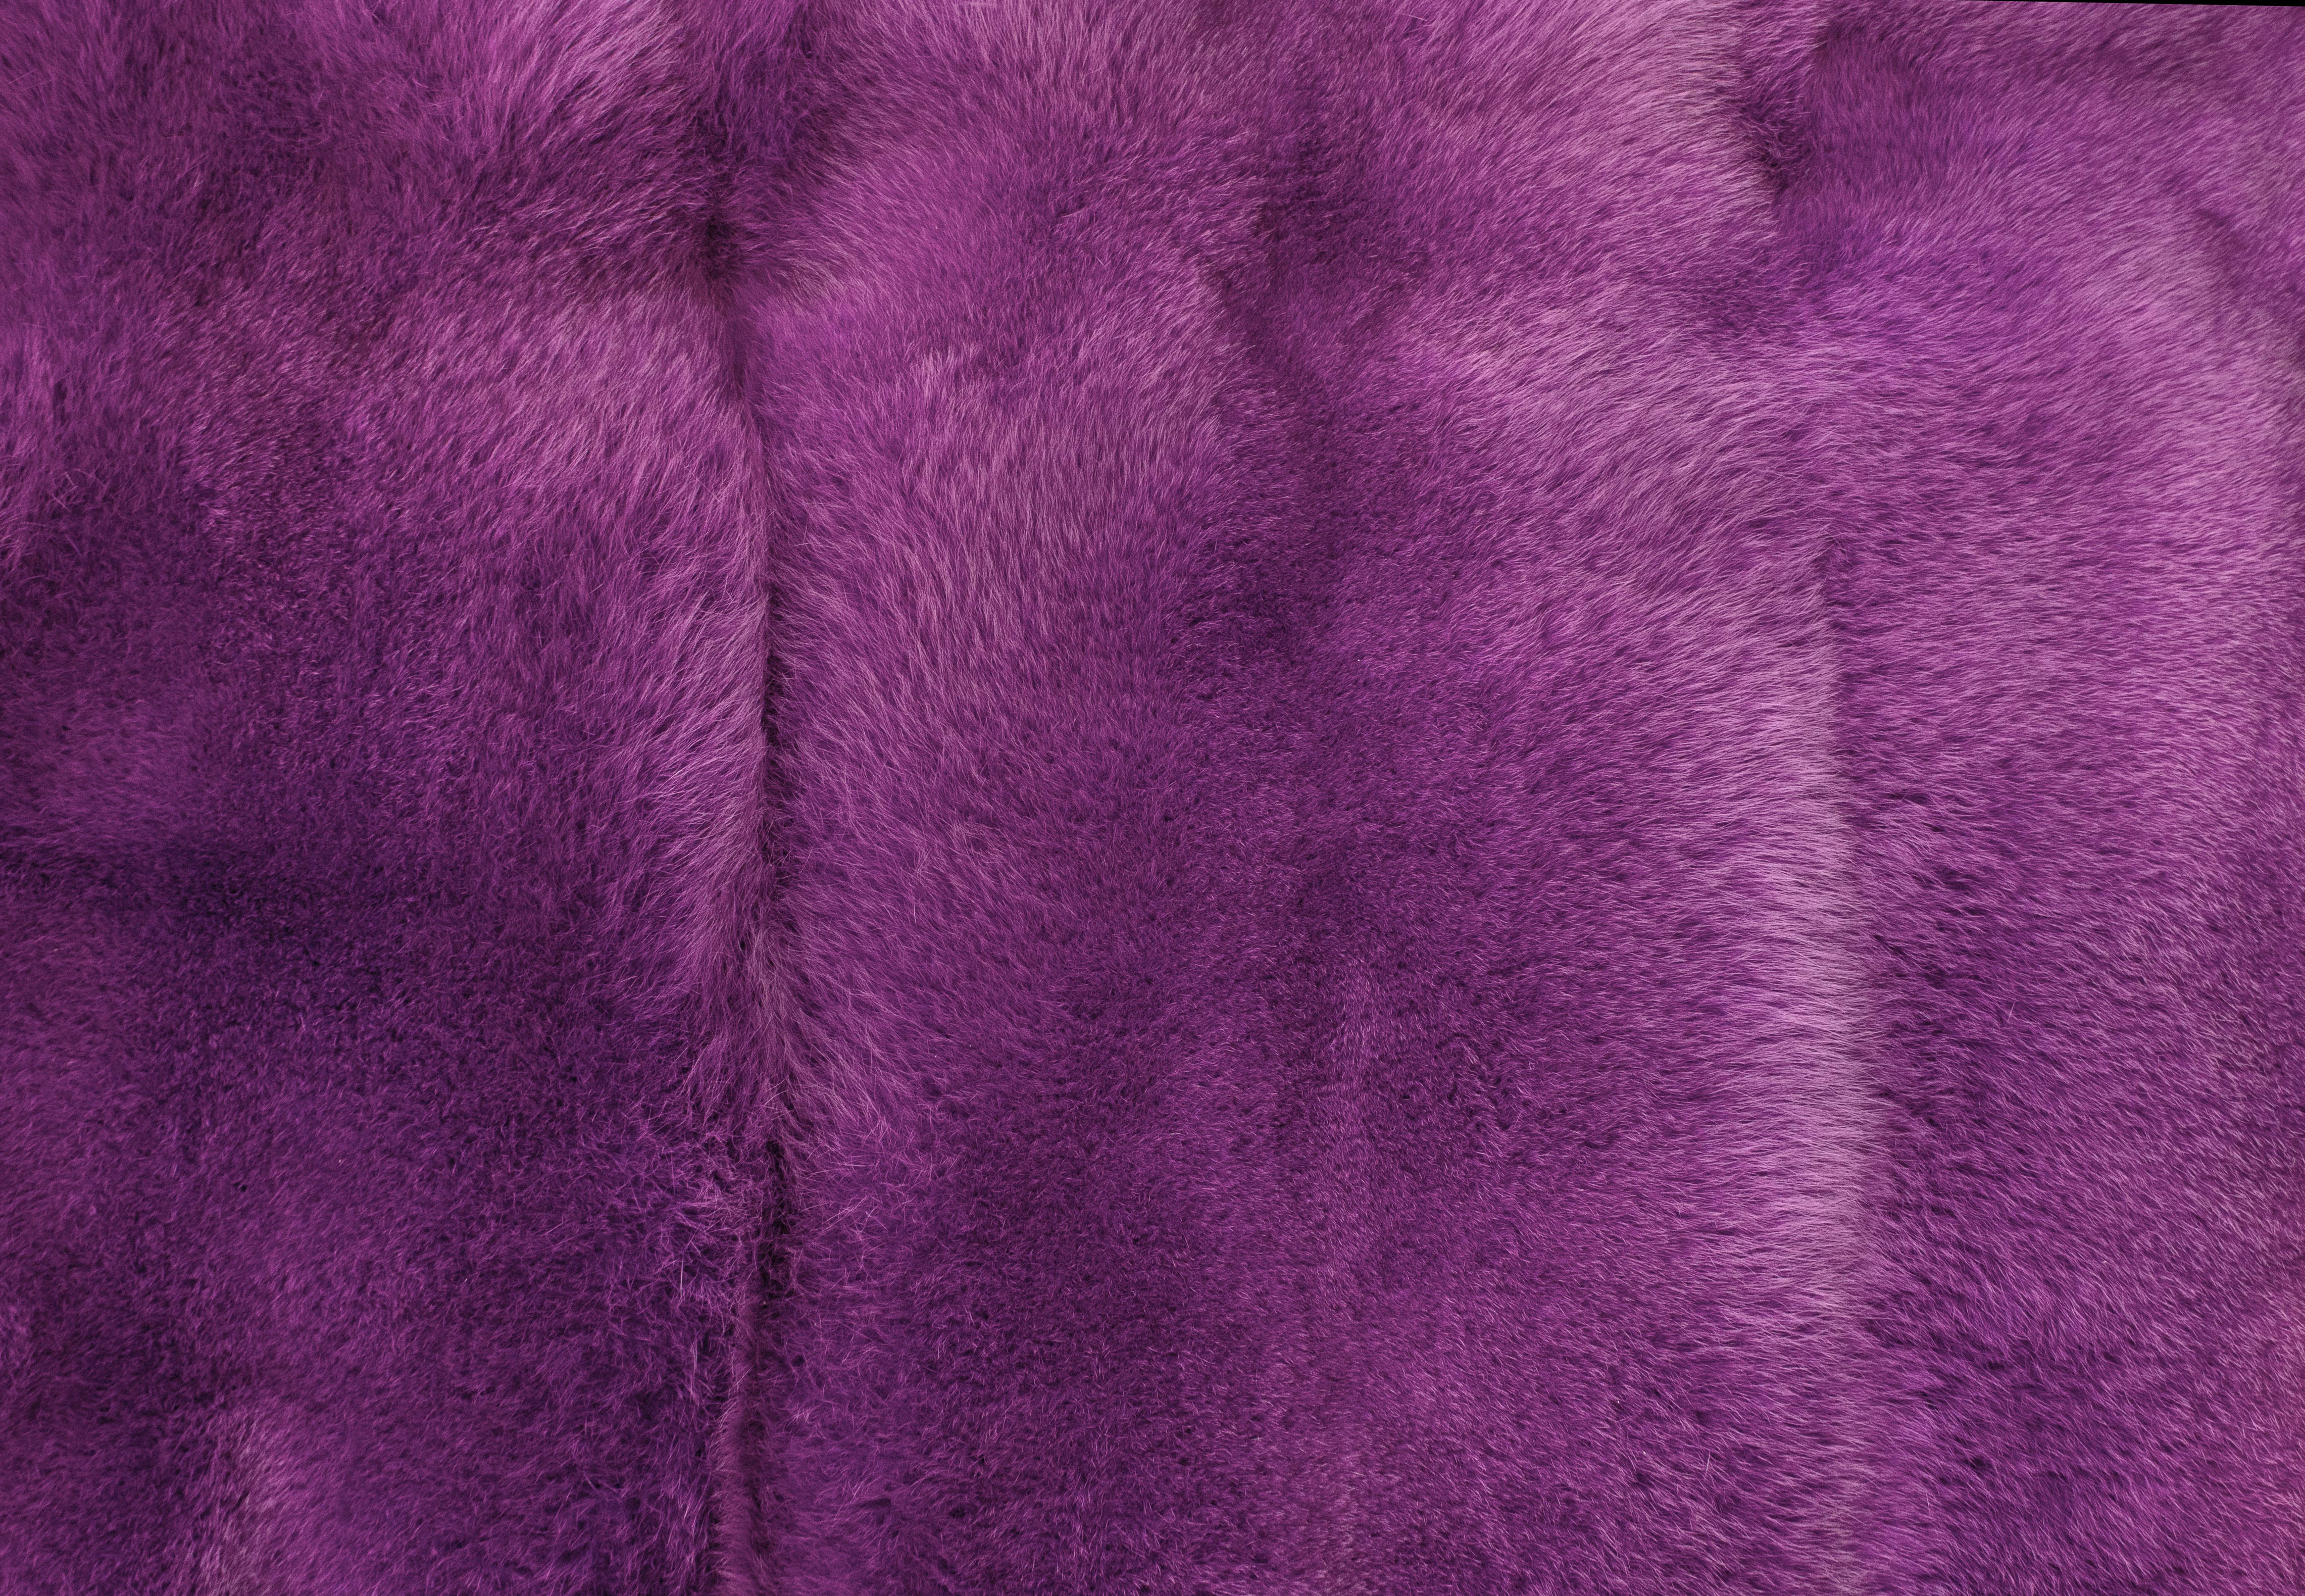 Shadow fox fur carpet in purple